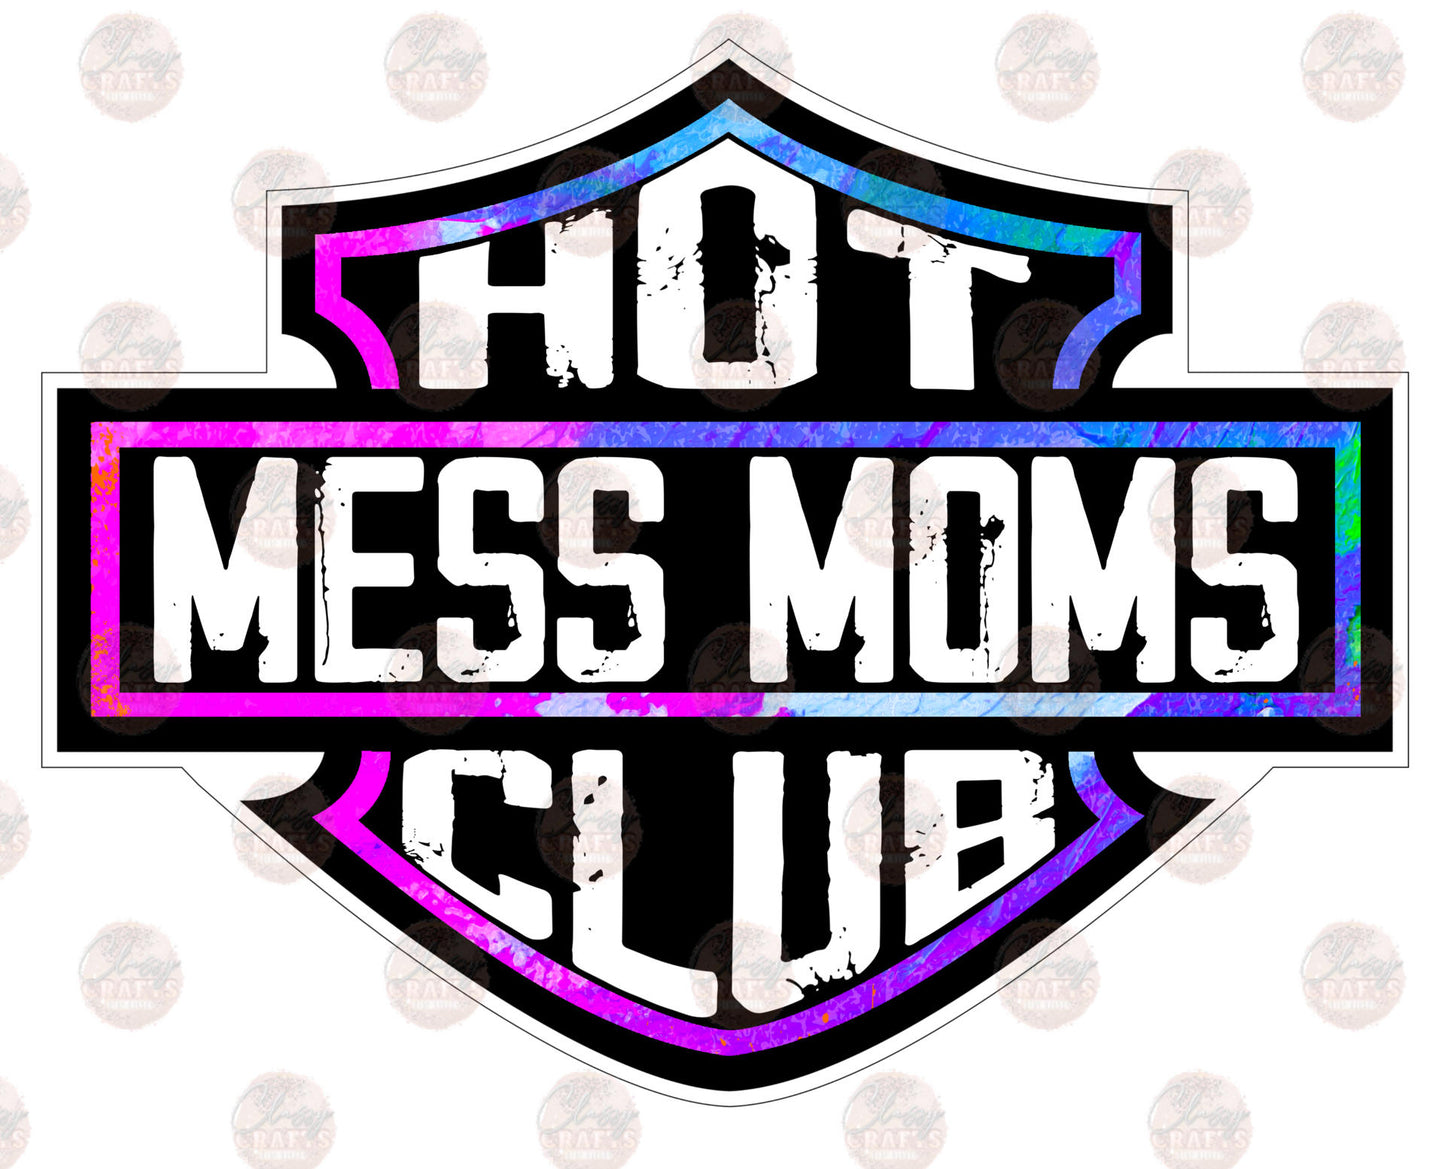 Hot Mess Moms Club Transfer